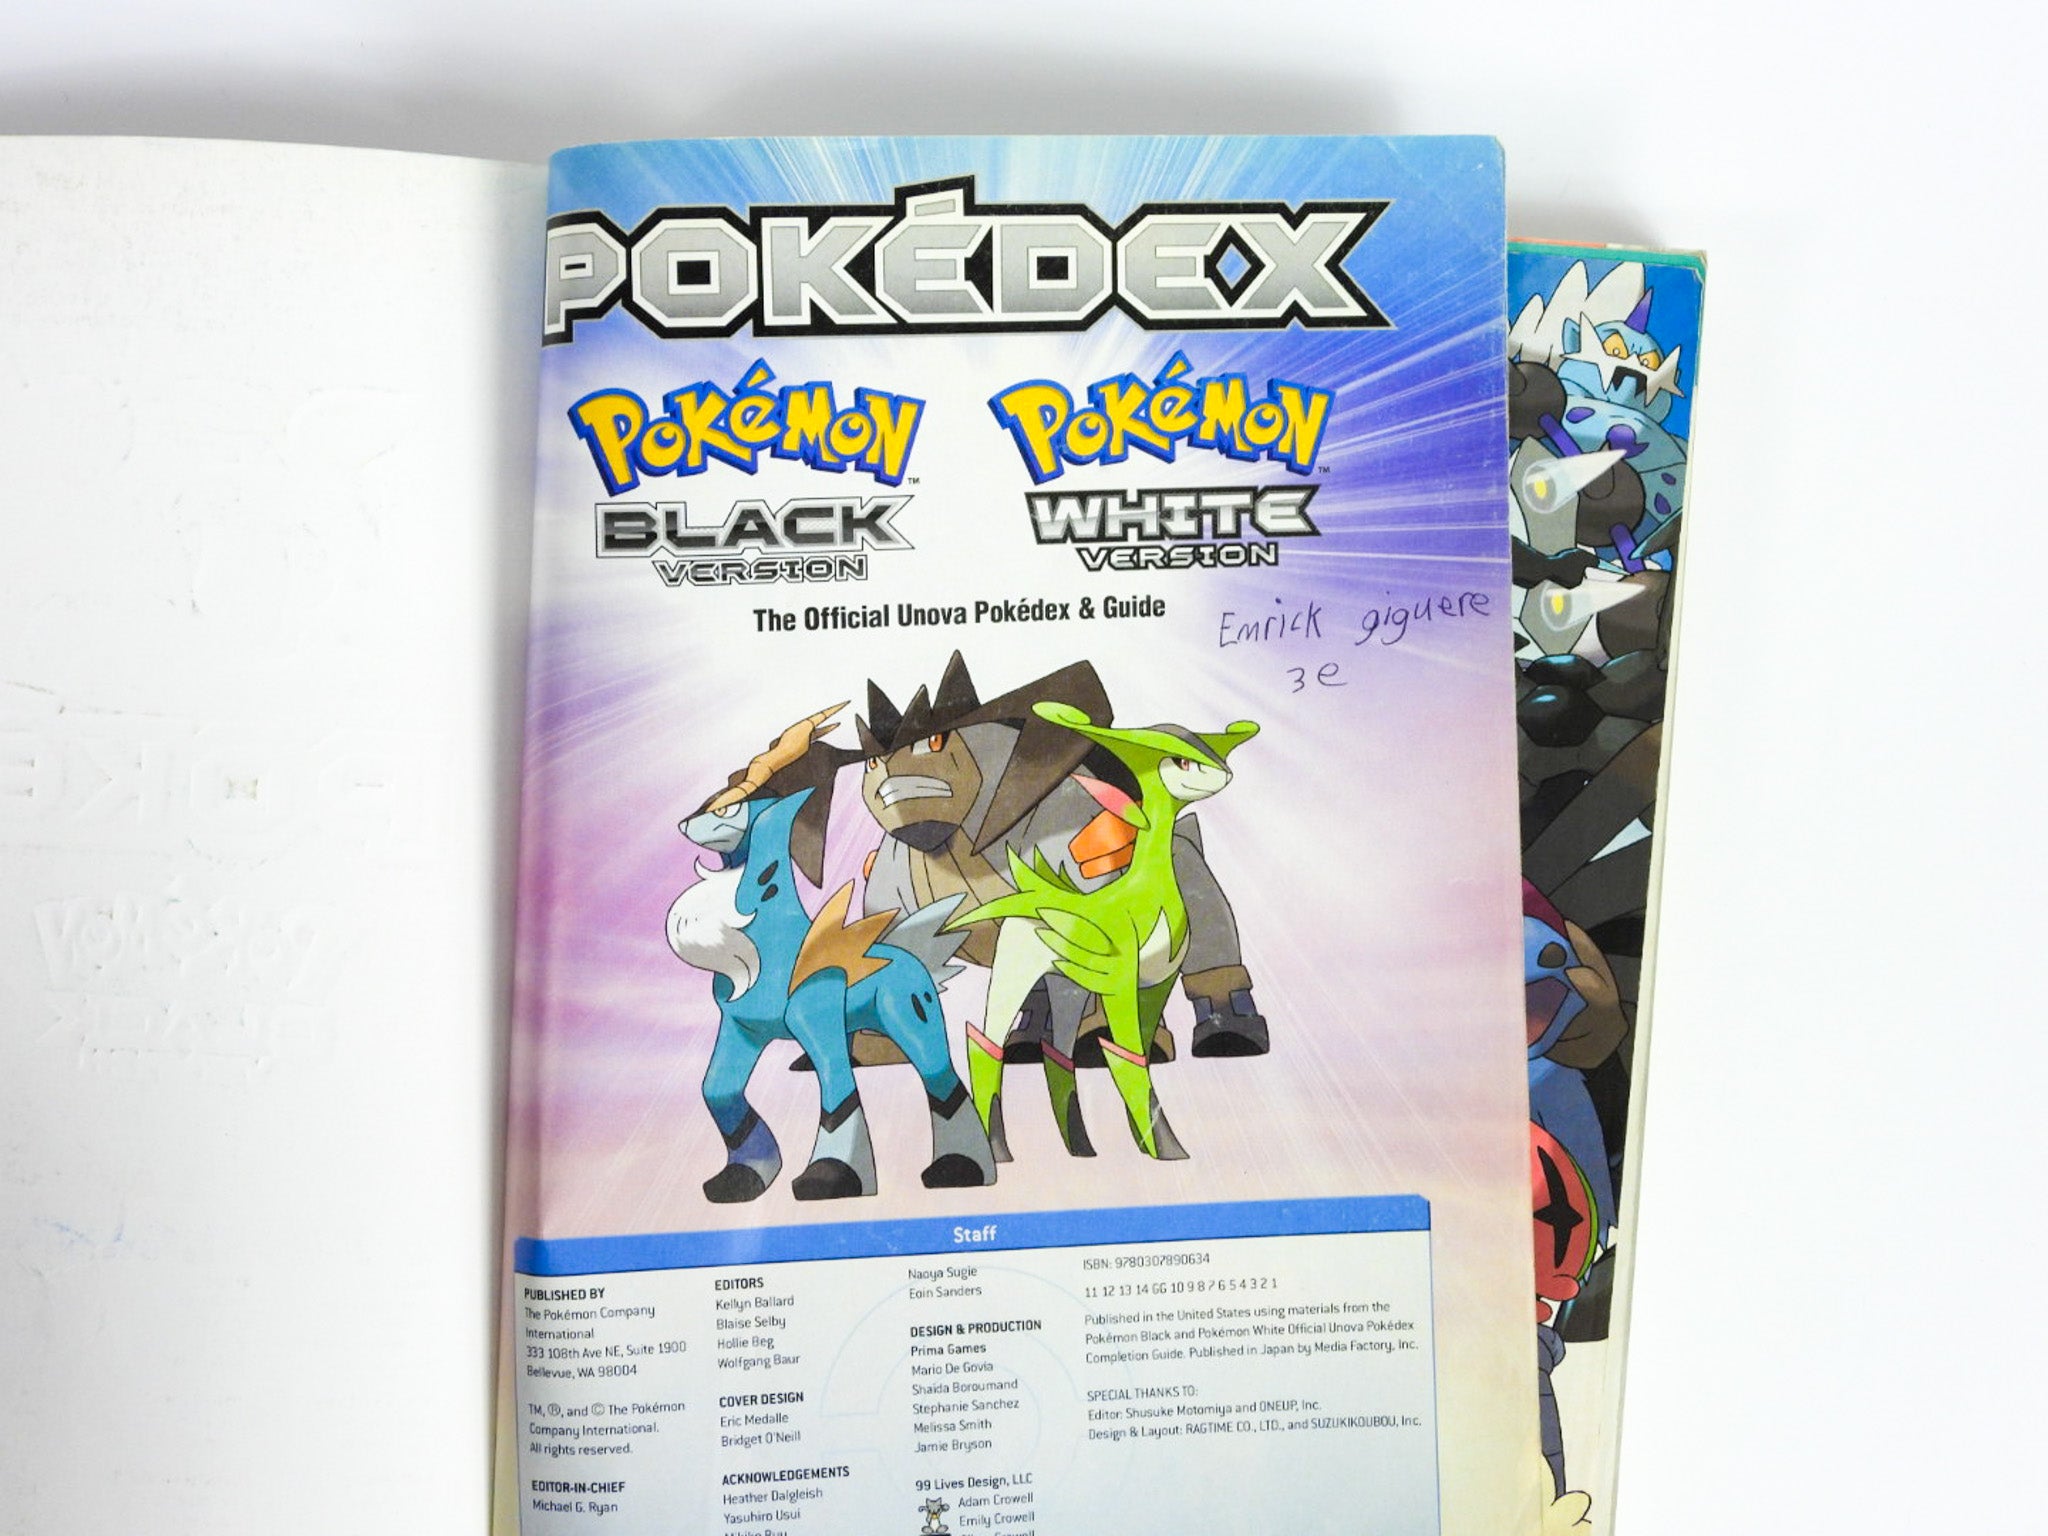 Buy Pokemon Black and White Versions: The Offical Unova Pokedex